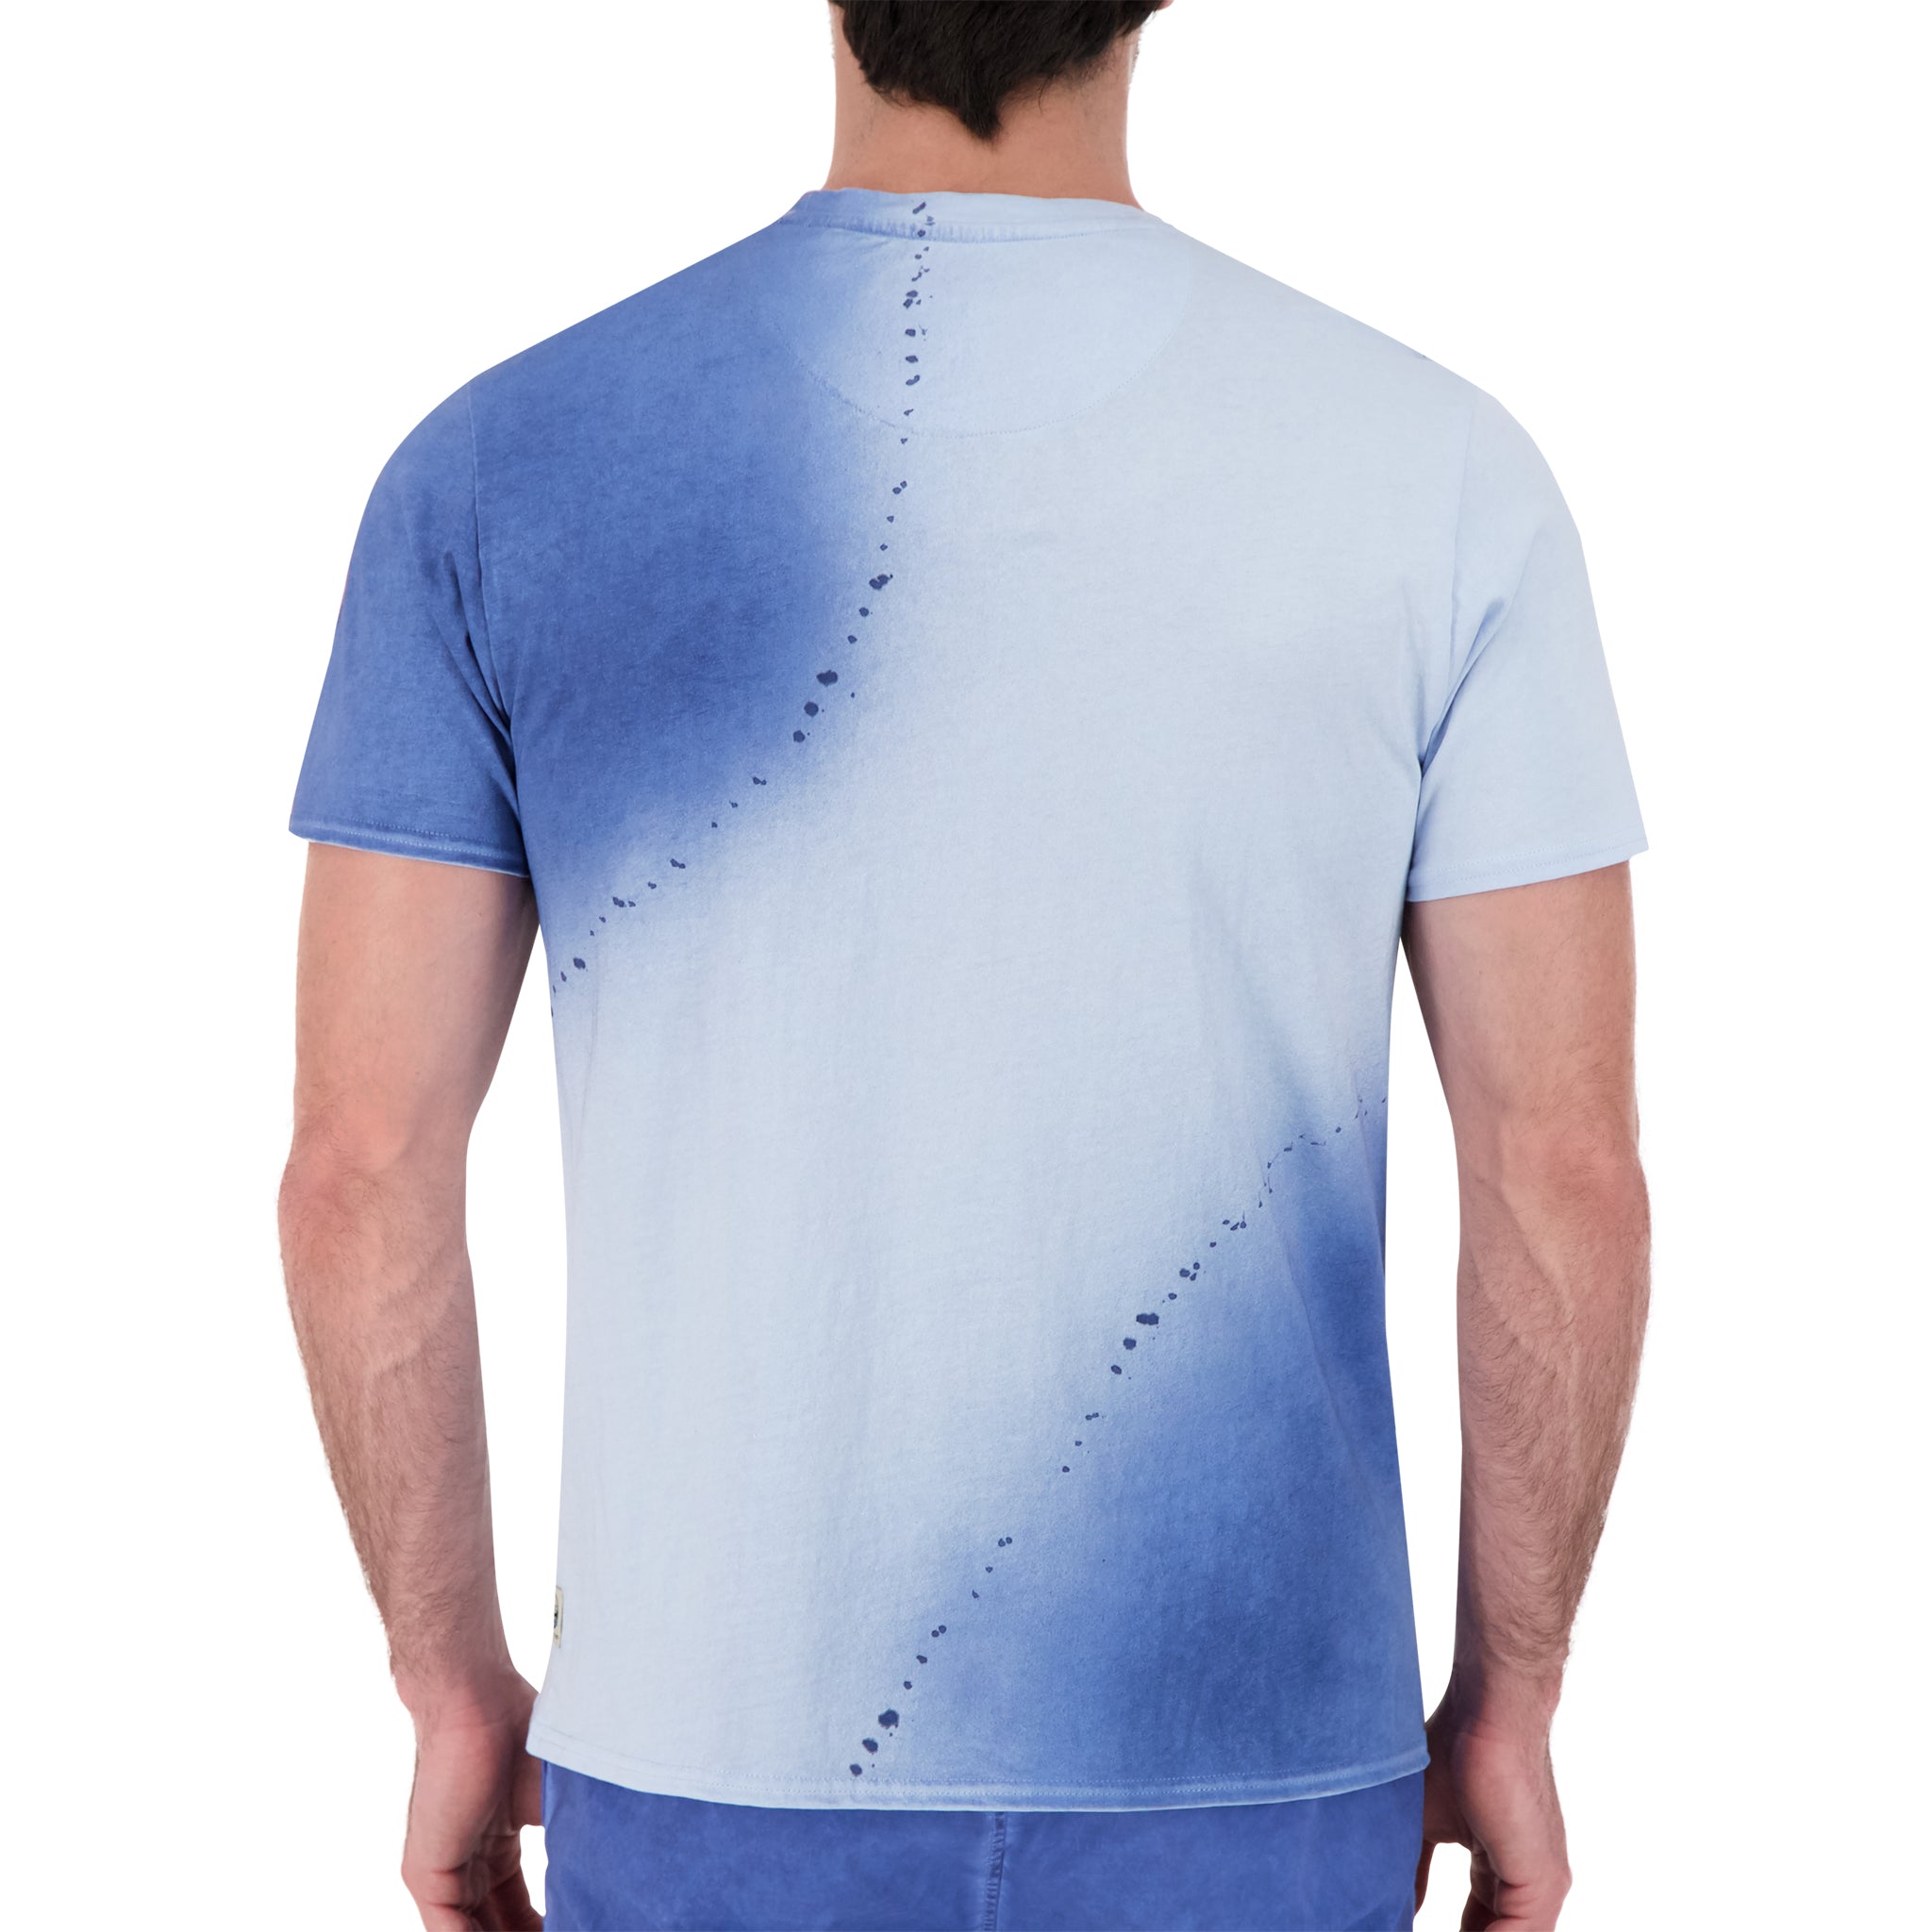 Splatter & Spray T-Shirt in Light Blue